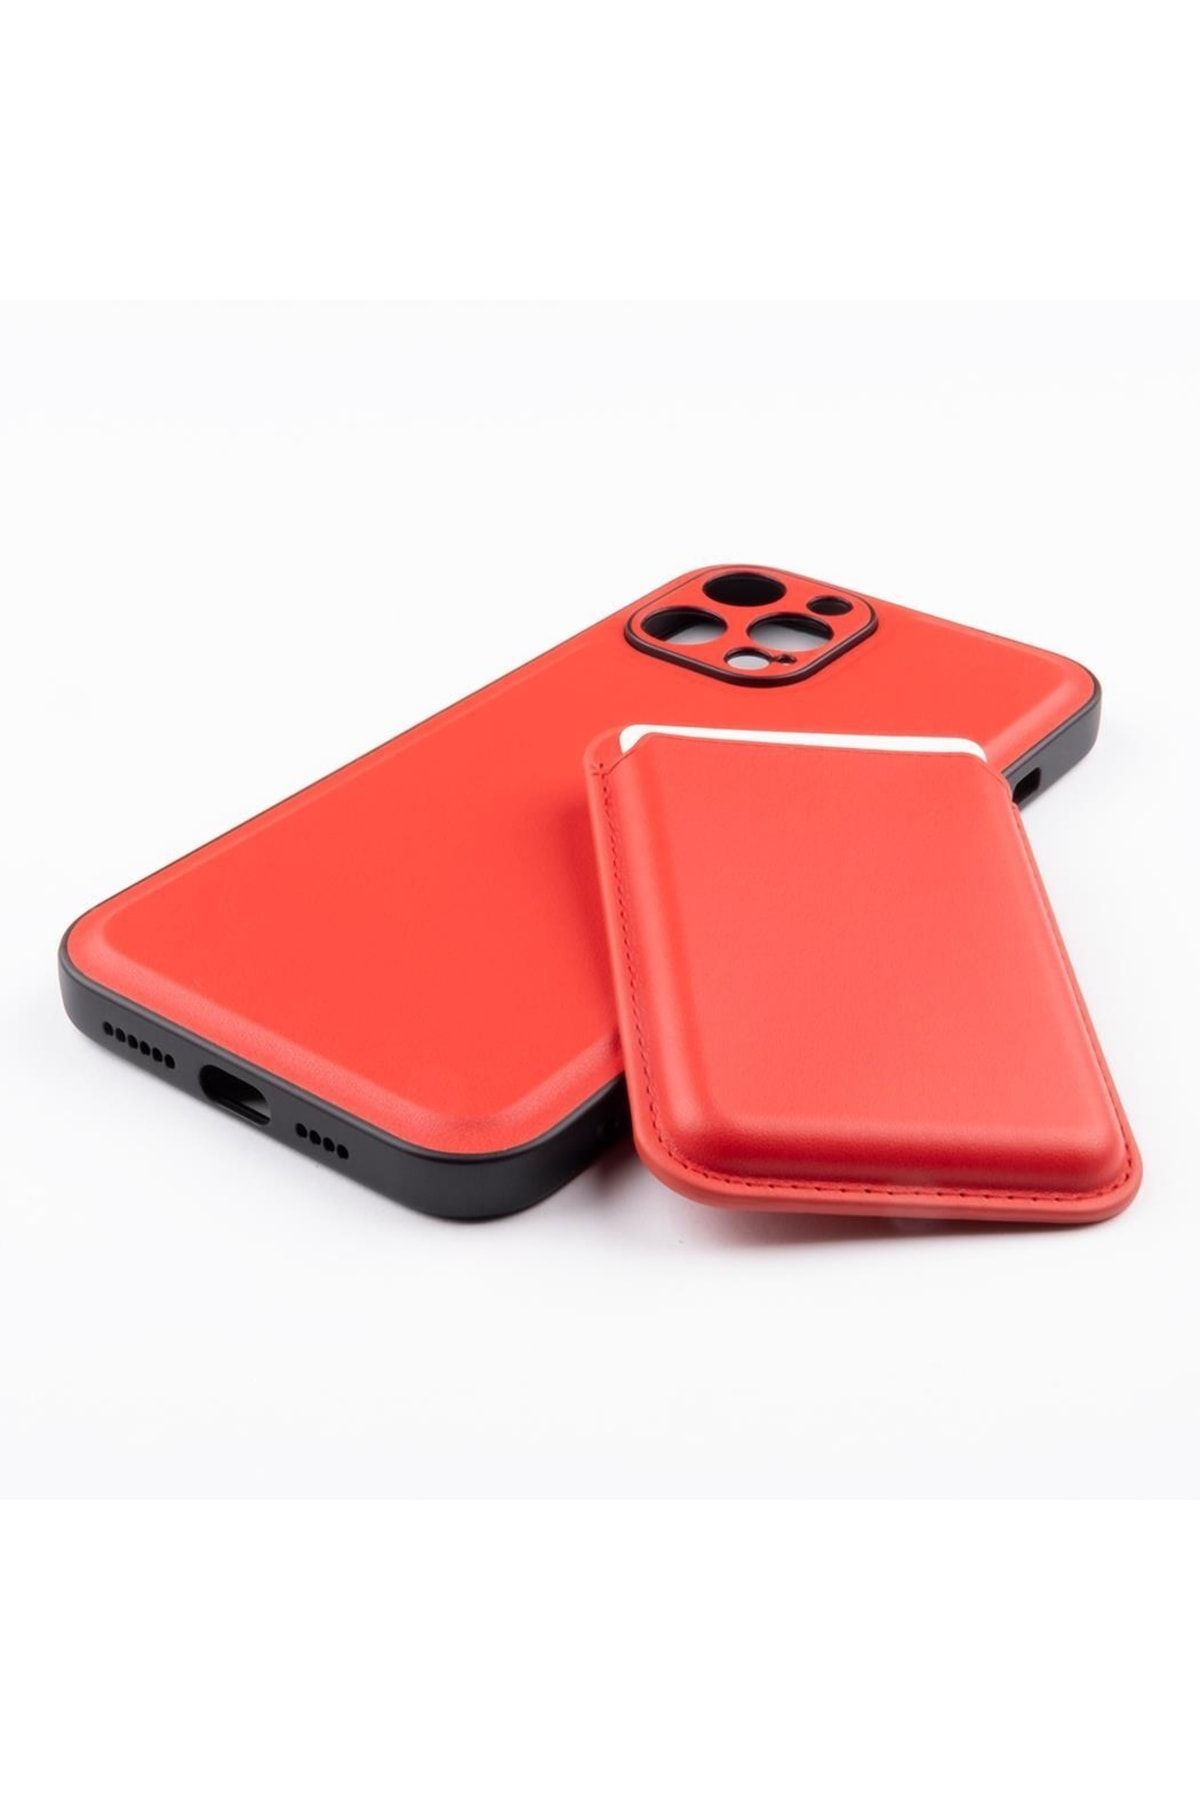 Jopus Iphone 12 Pro Max Js-275 Gravity Cüzdanli Silikon Kılıf Kırmızı